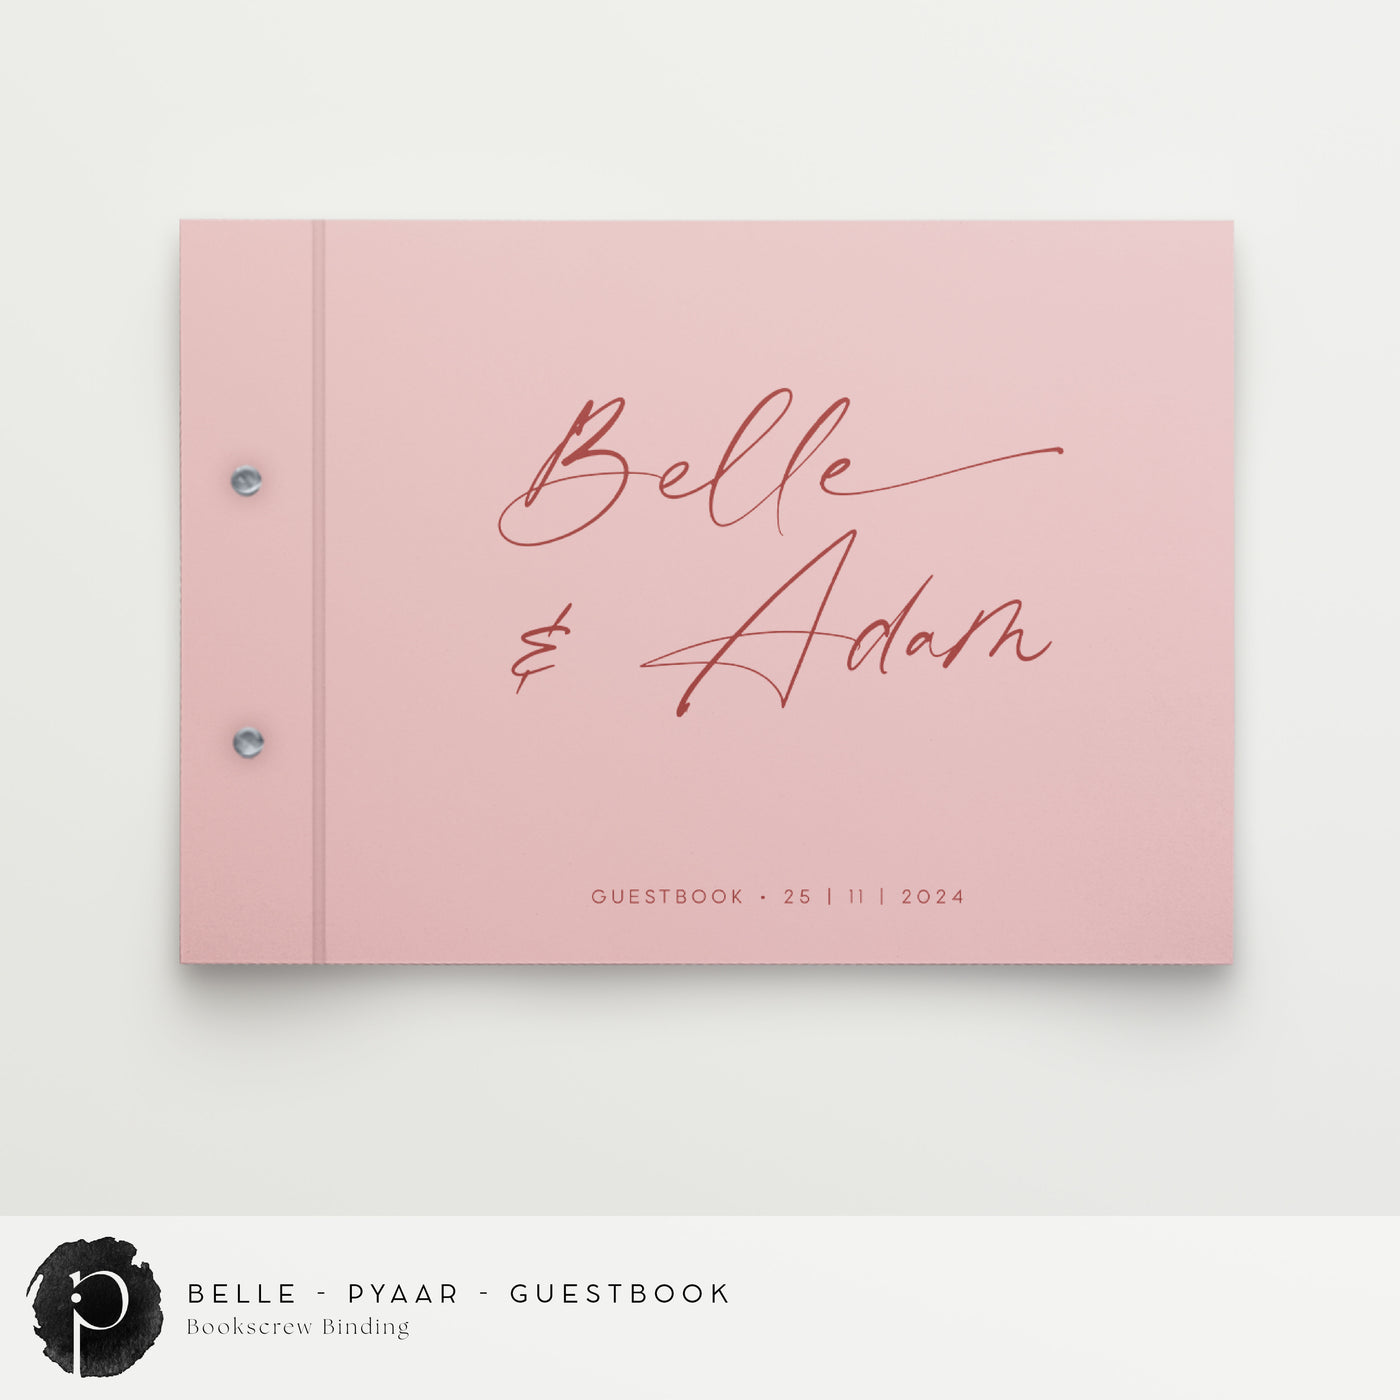 Belle - Guestbook